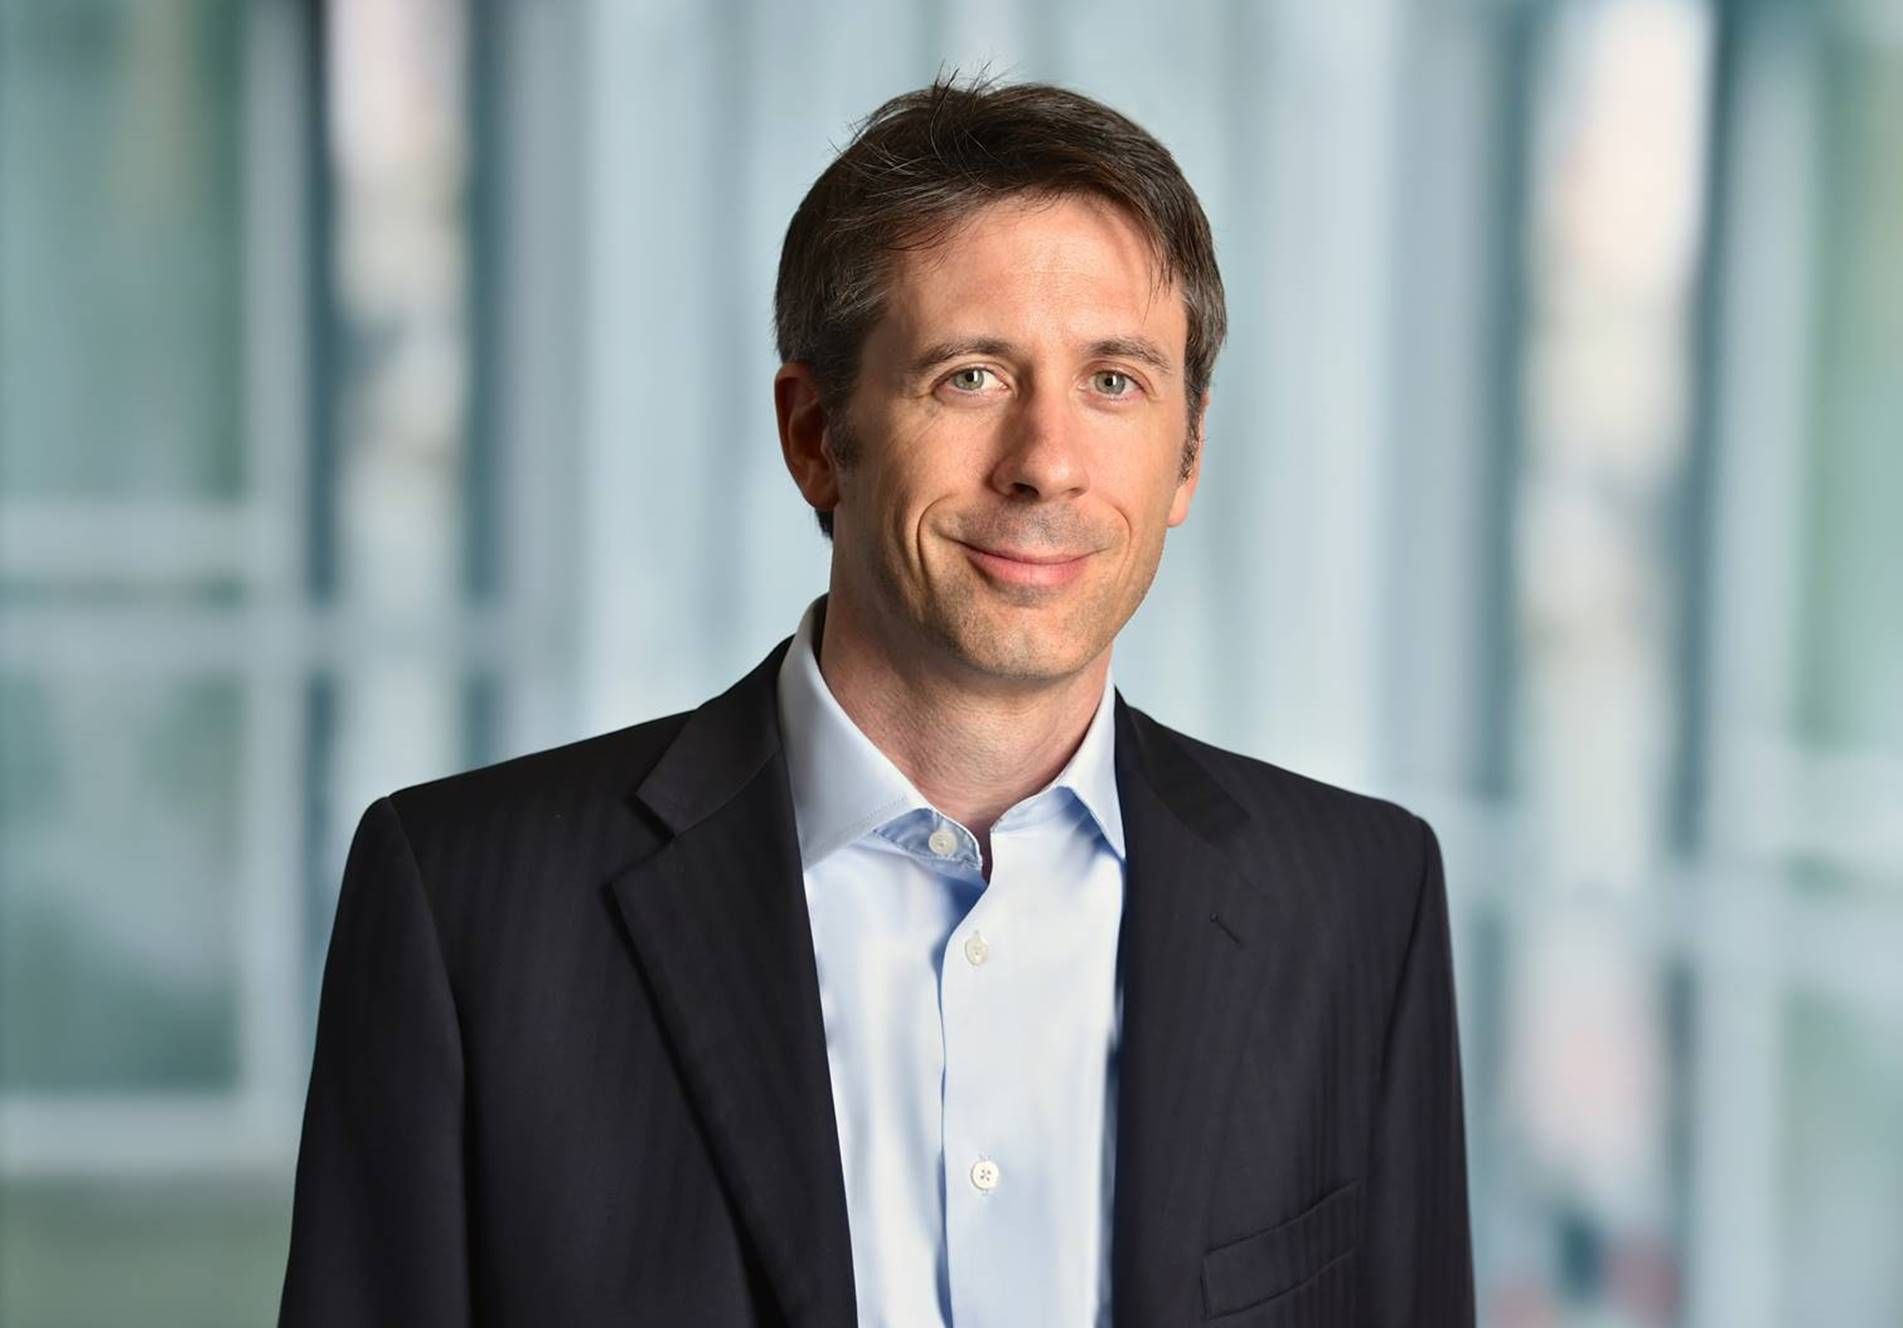 Mark Seall Group Head of Digital Communications at Siemens AG